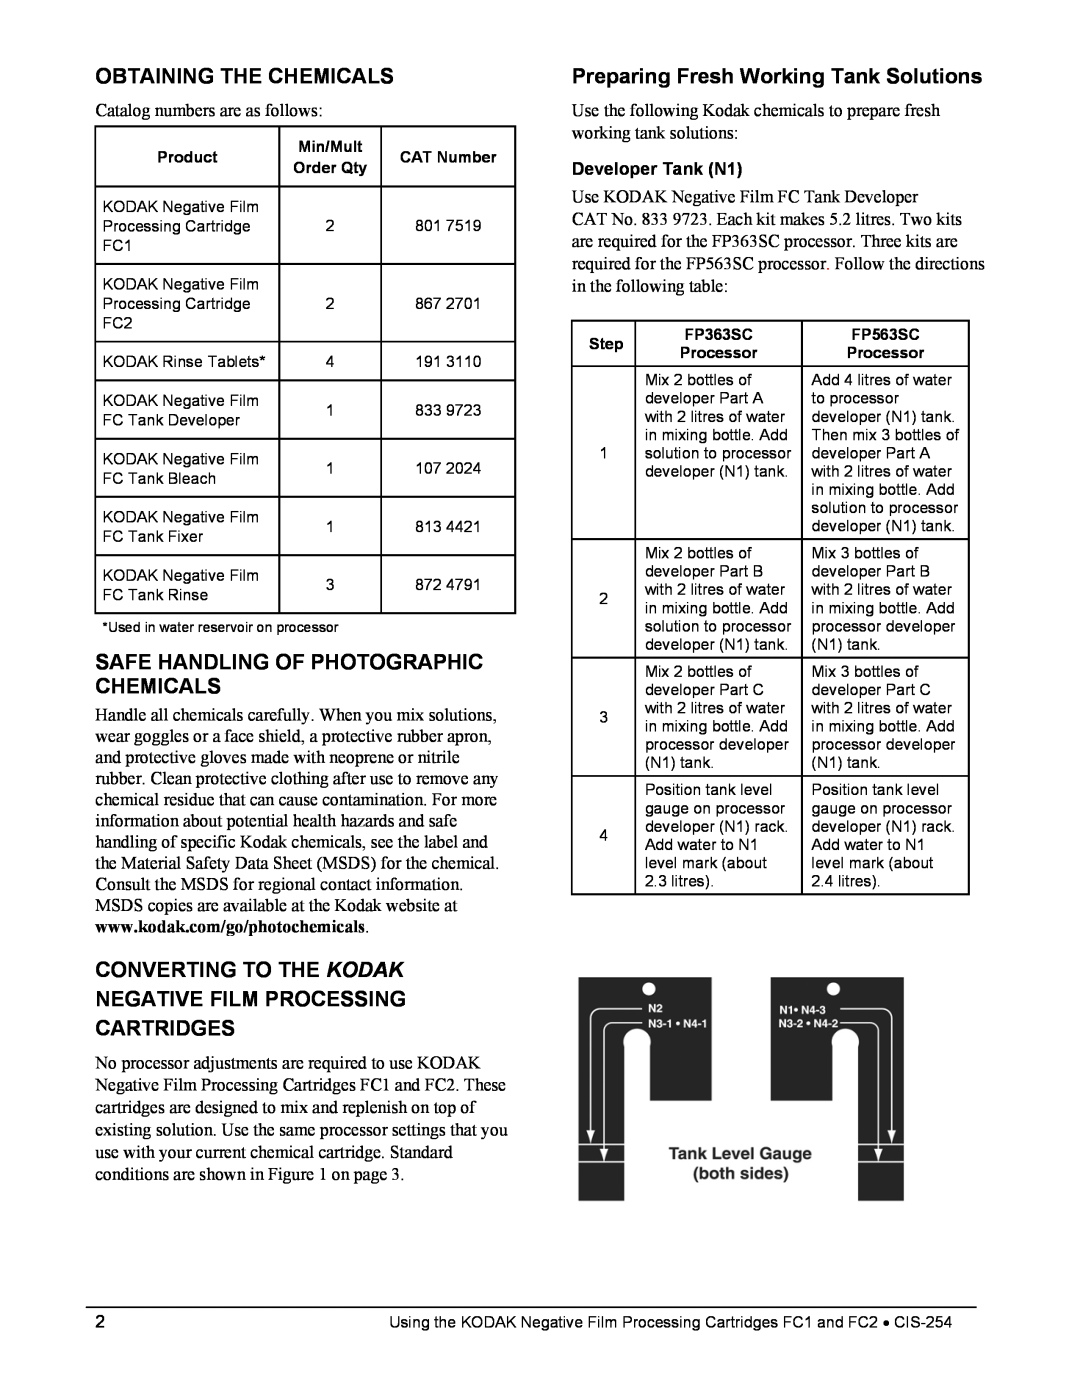 Kodak FC1, FC2 manual Obtaining The Chemicals, Safe Handling Of Photographic Chemicals, Cartridges, Developer Tank N1 